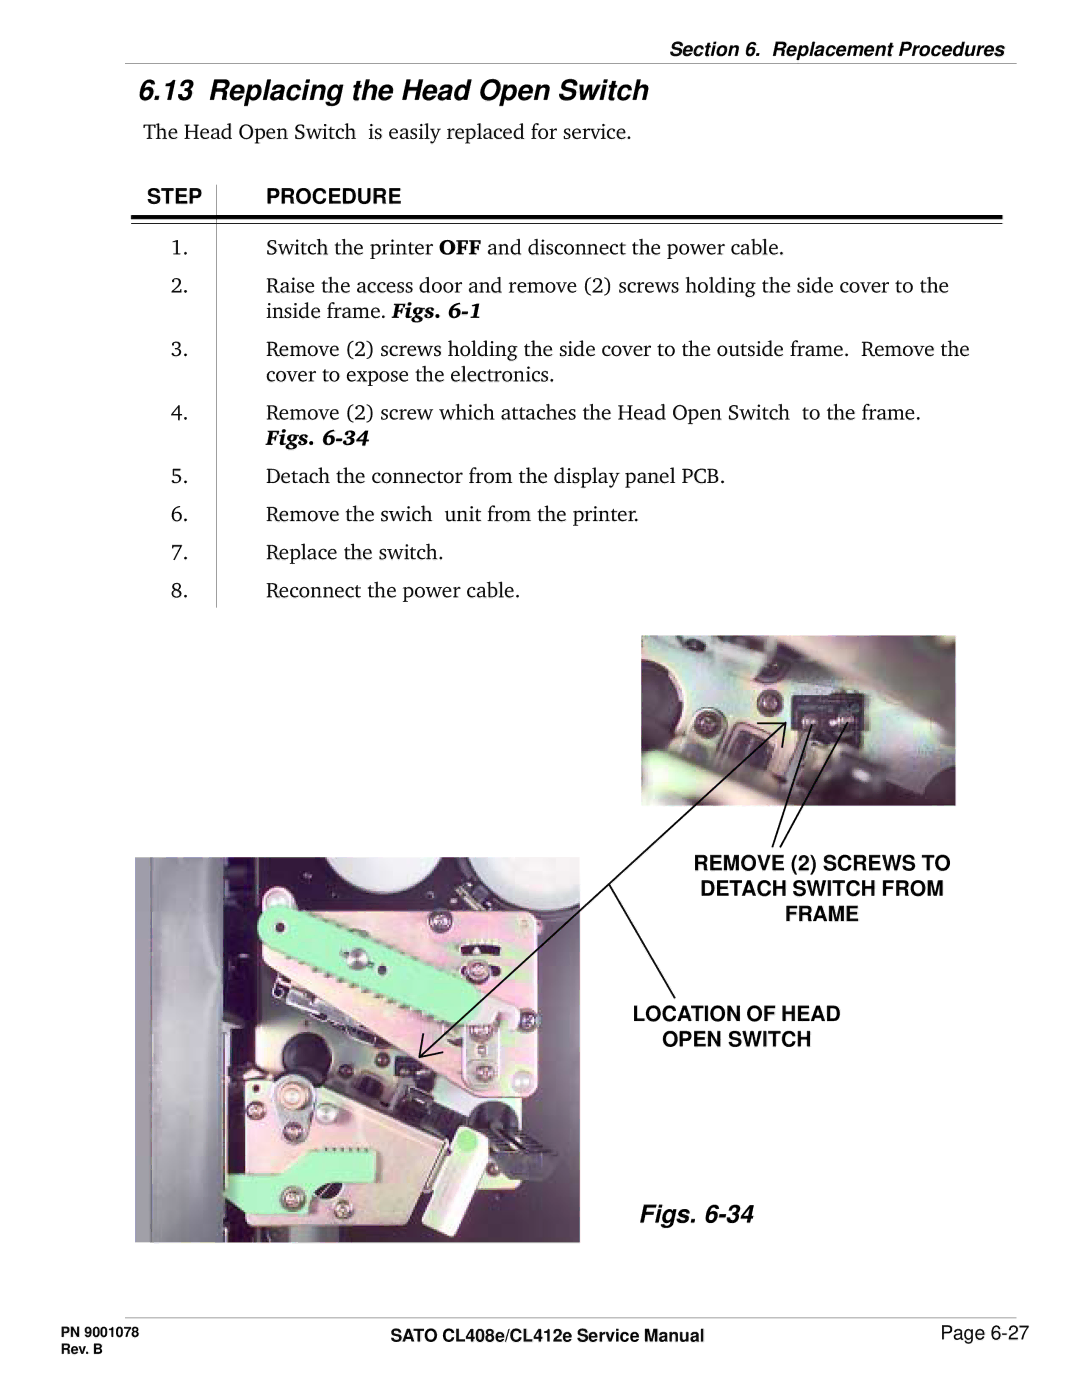 SATO CL412E service manual Replacing the Head Open Switch 